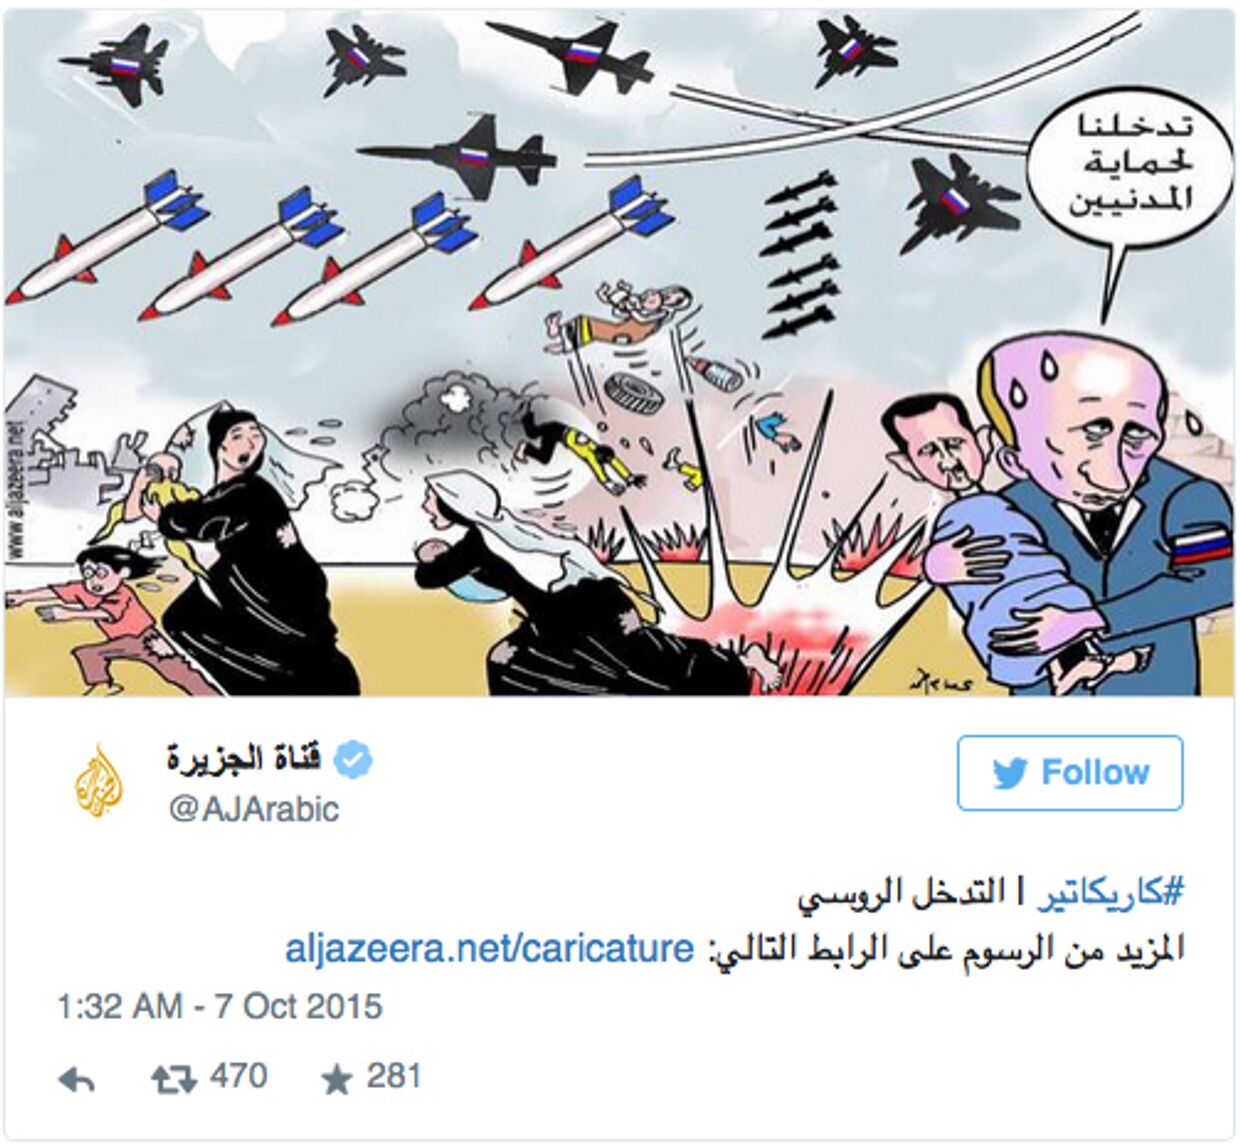 Карикатура на странице телеканала Al-Jazeera в Twitter на тему действий России в Сирии